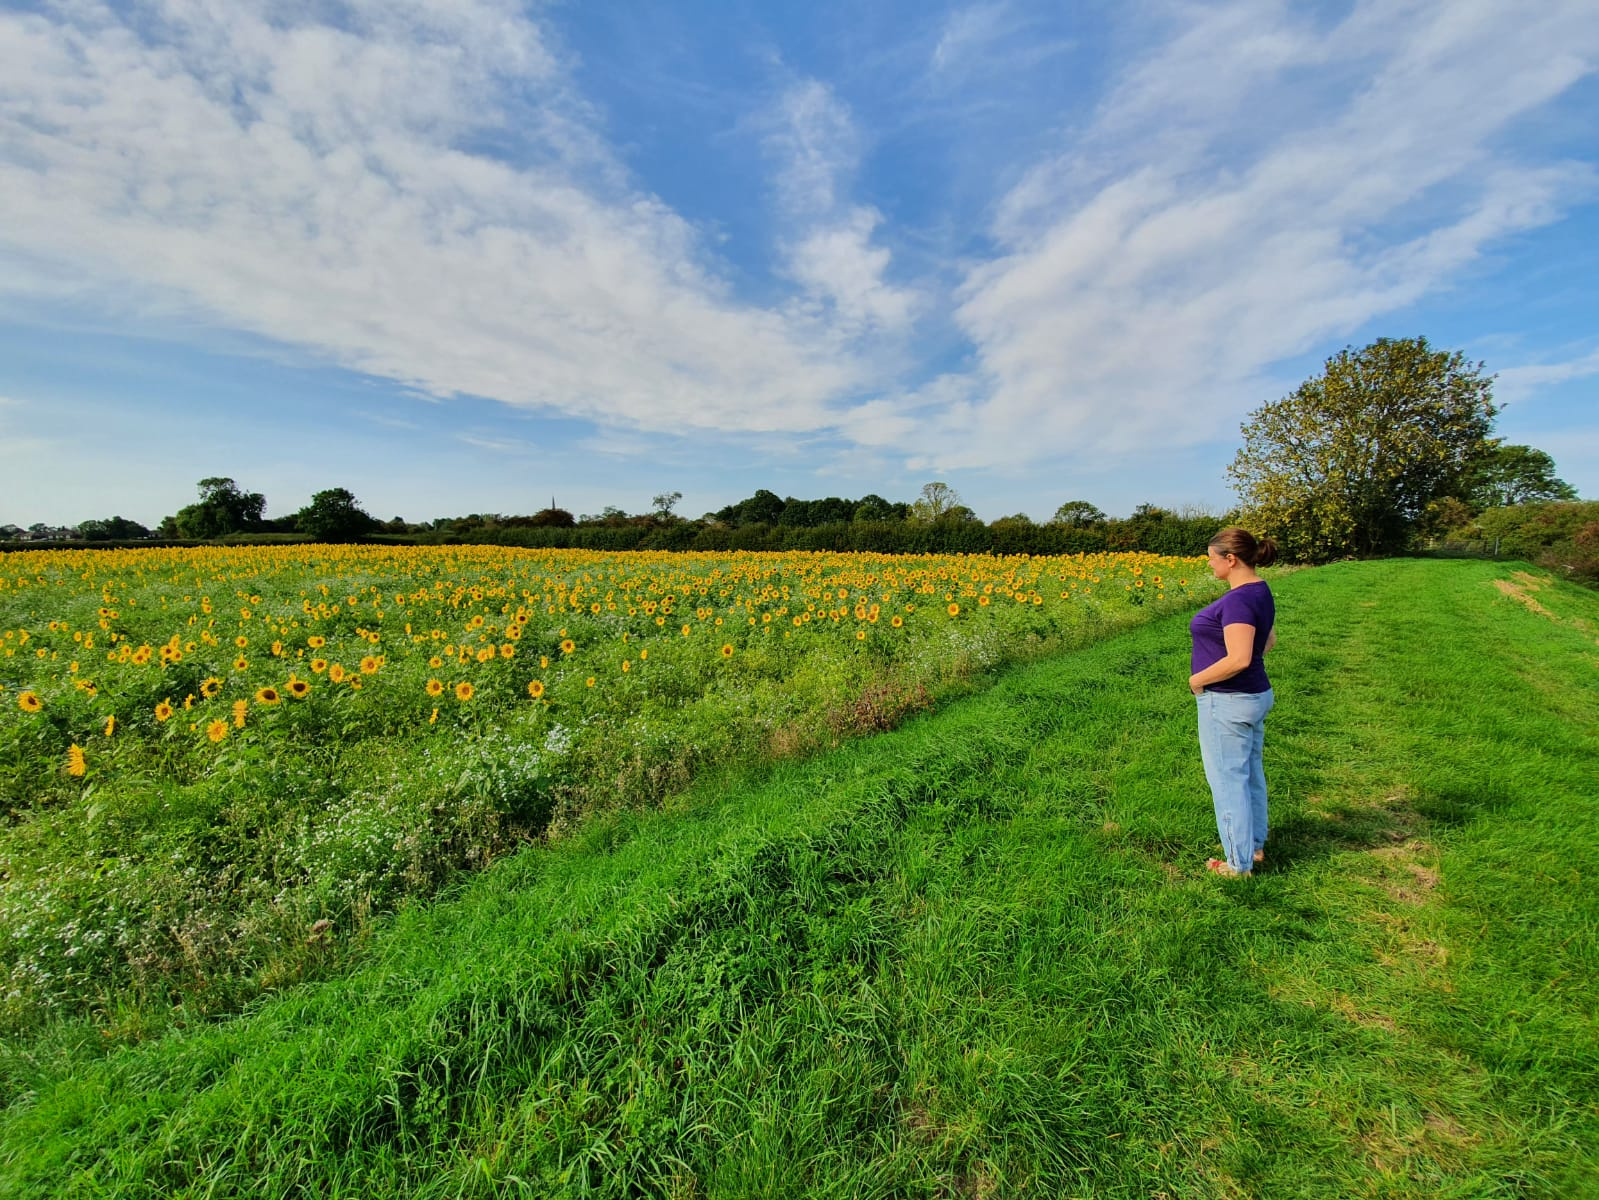 Rachel, founder of Open Skies Yoga, gazing across an open field of sunflowers in Helpringham